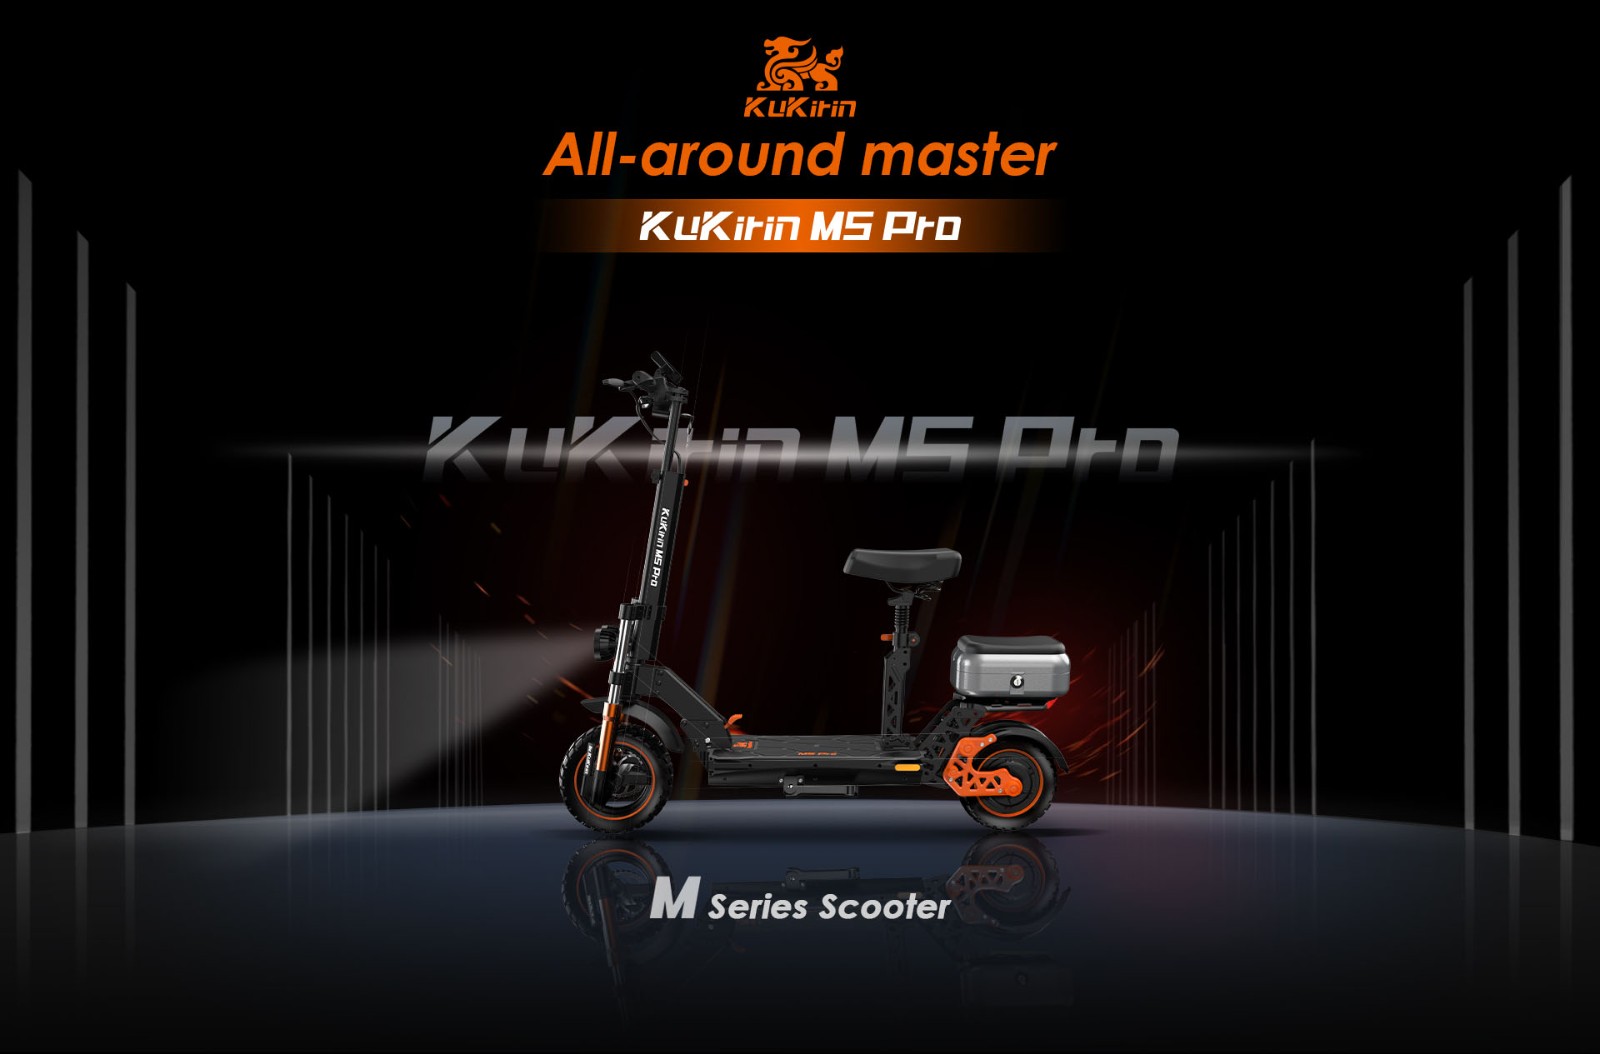 Kukirin M5 Pro elektrische scooter 48V 20Ah 1000W motor 52 km/u bereik 70 km